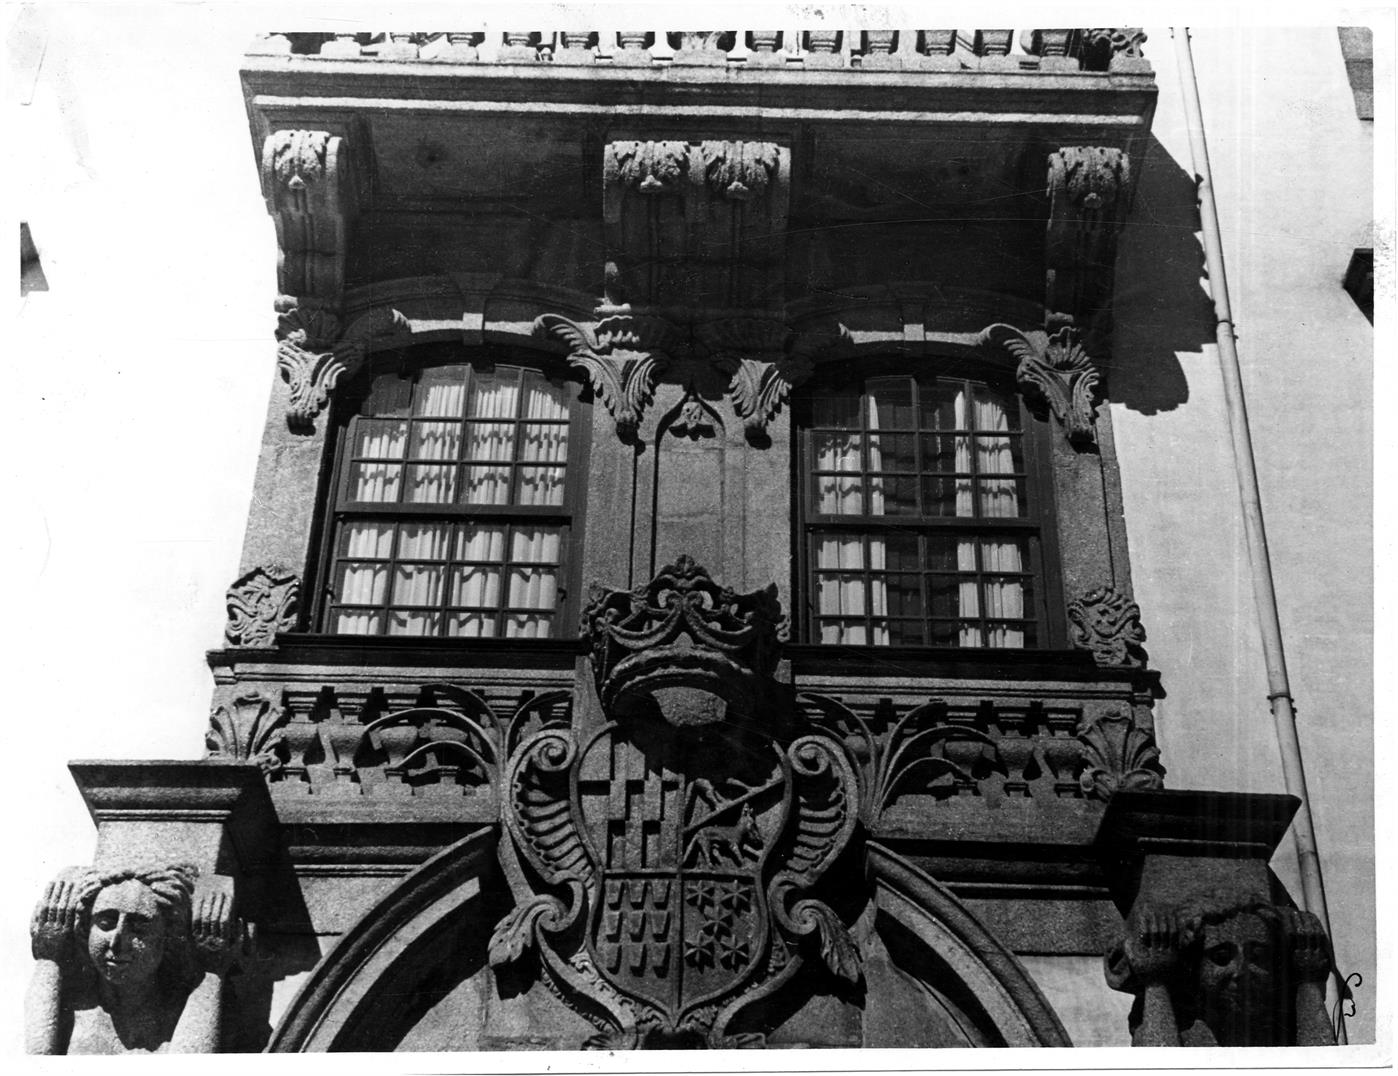 Aspectos arqueológicos e artísticos da cidade do Porto : pormenor da fachada da Casa das Sereias